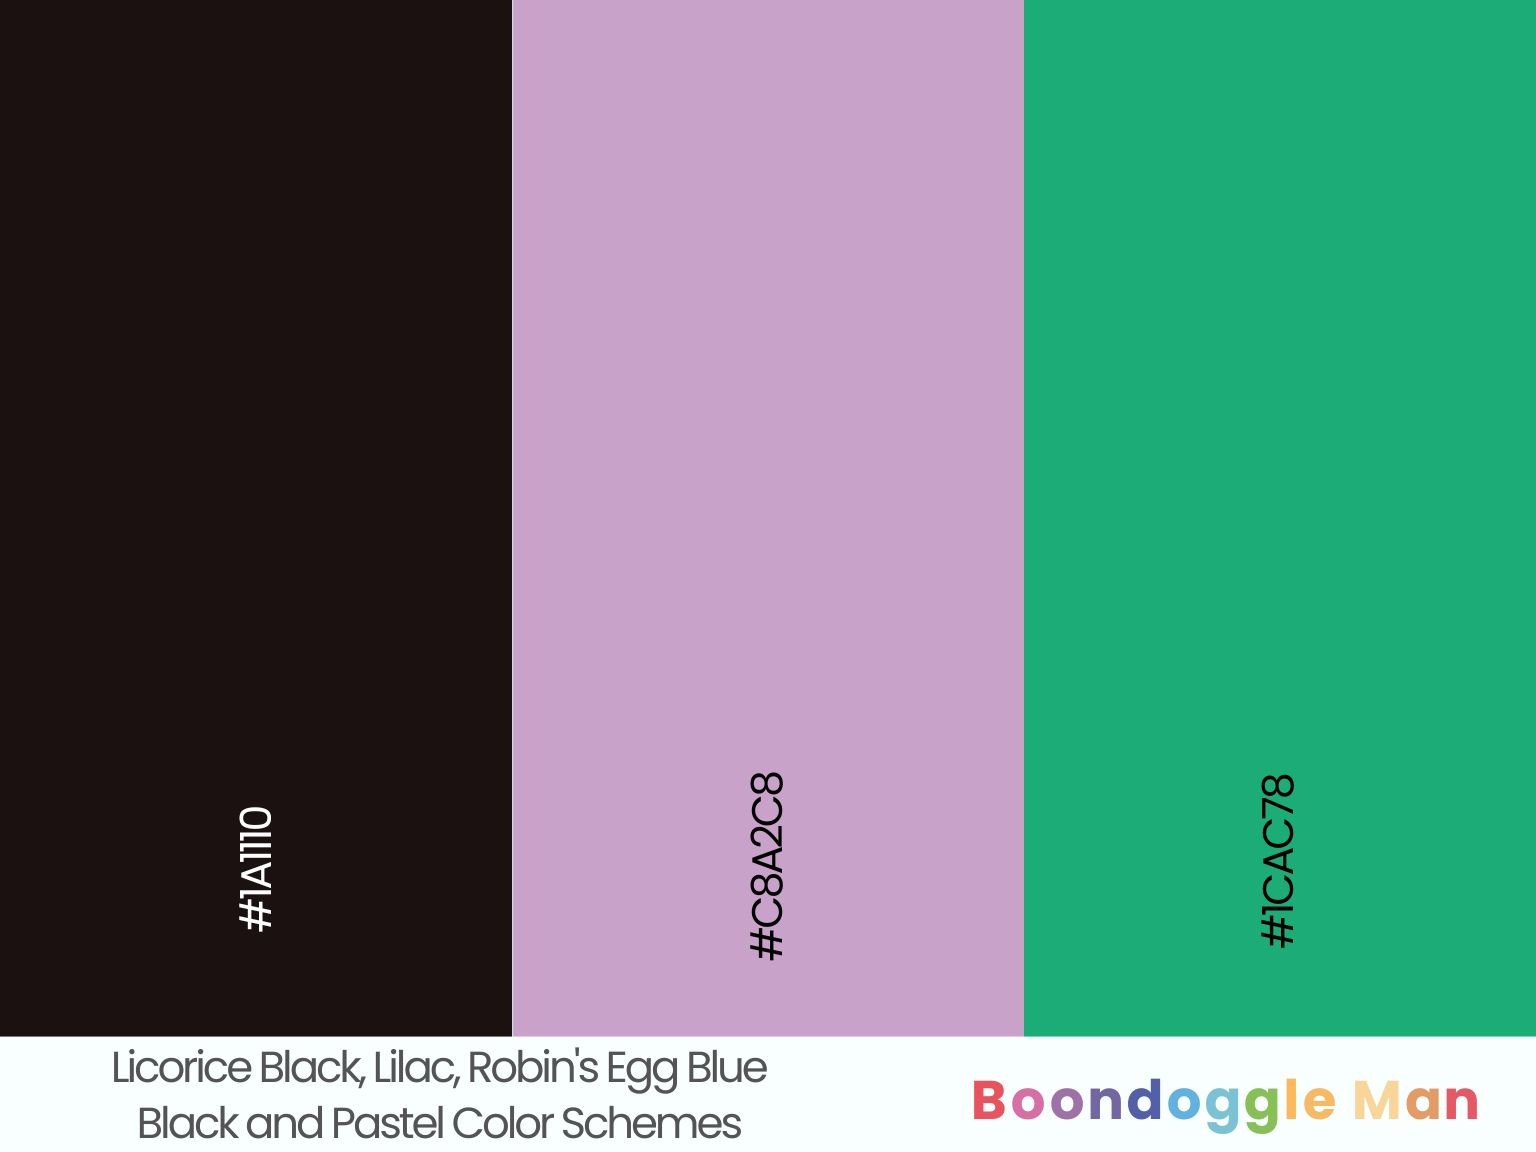 Licorice Black, Lilac, Robin's Egg Blue